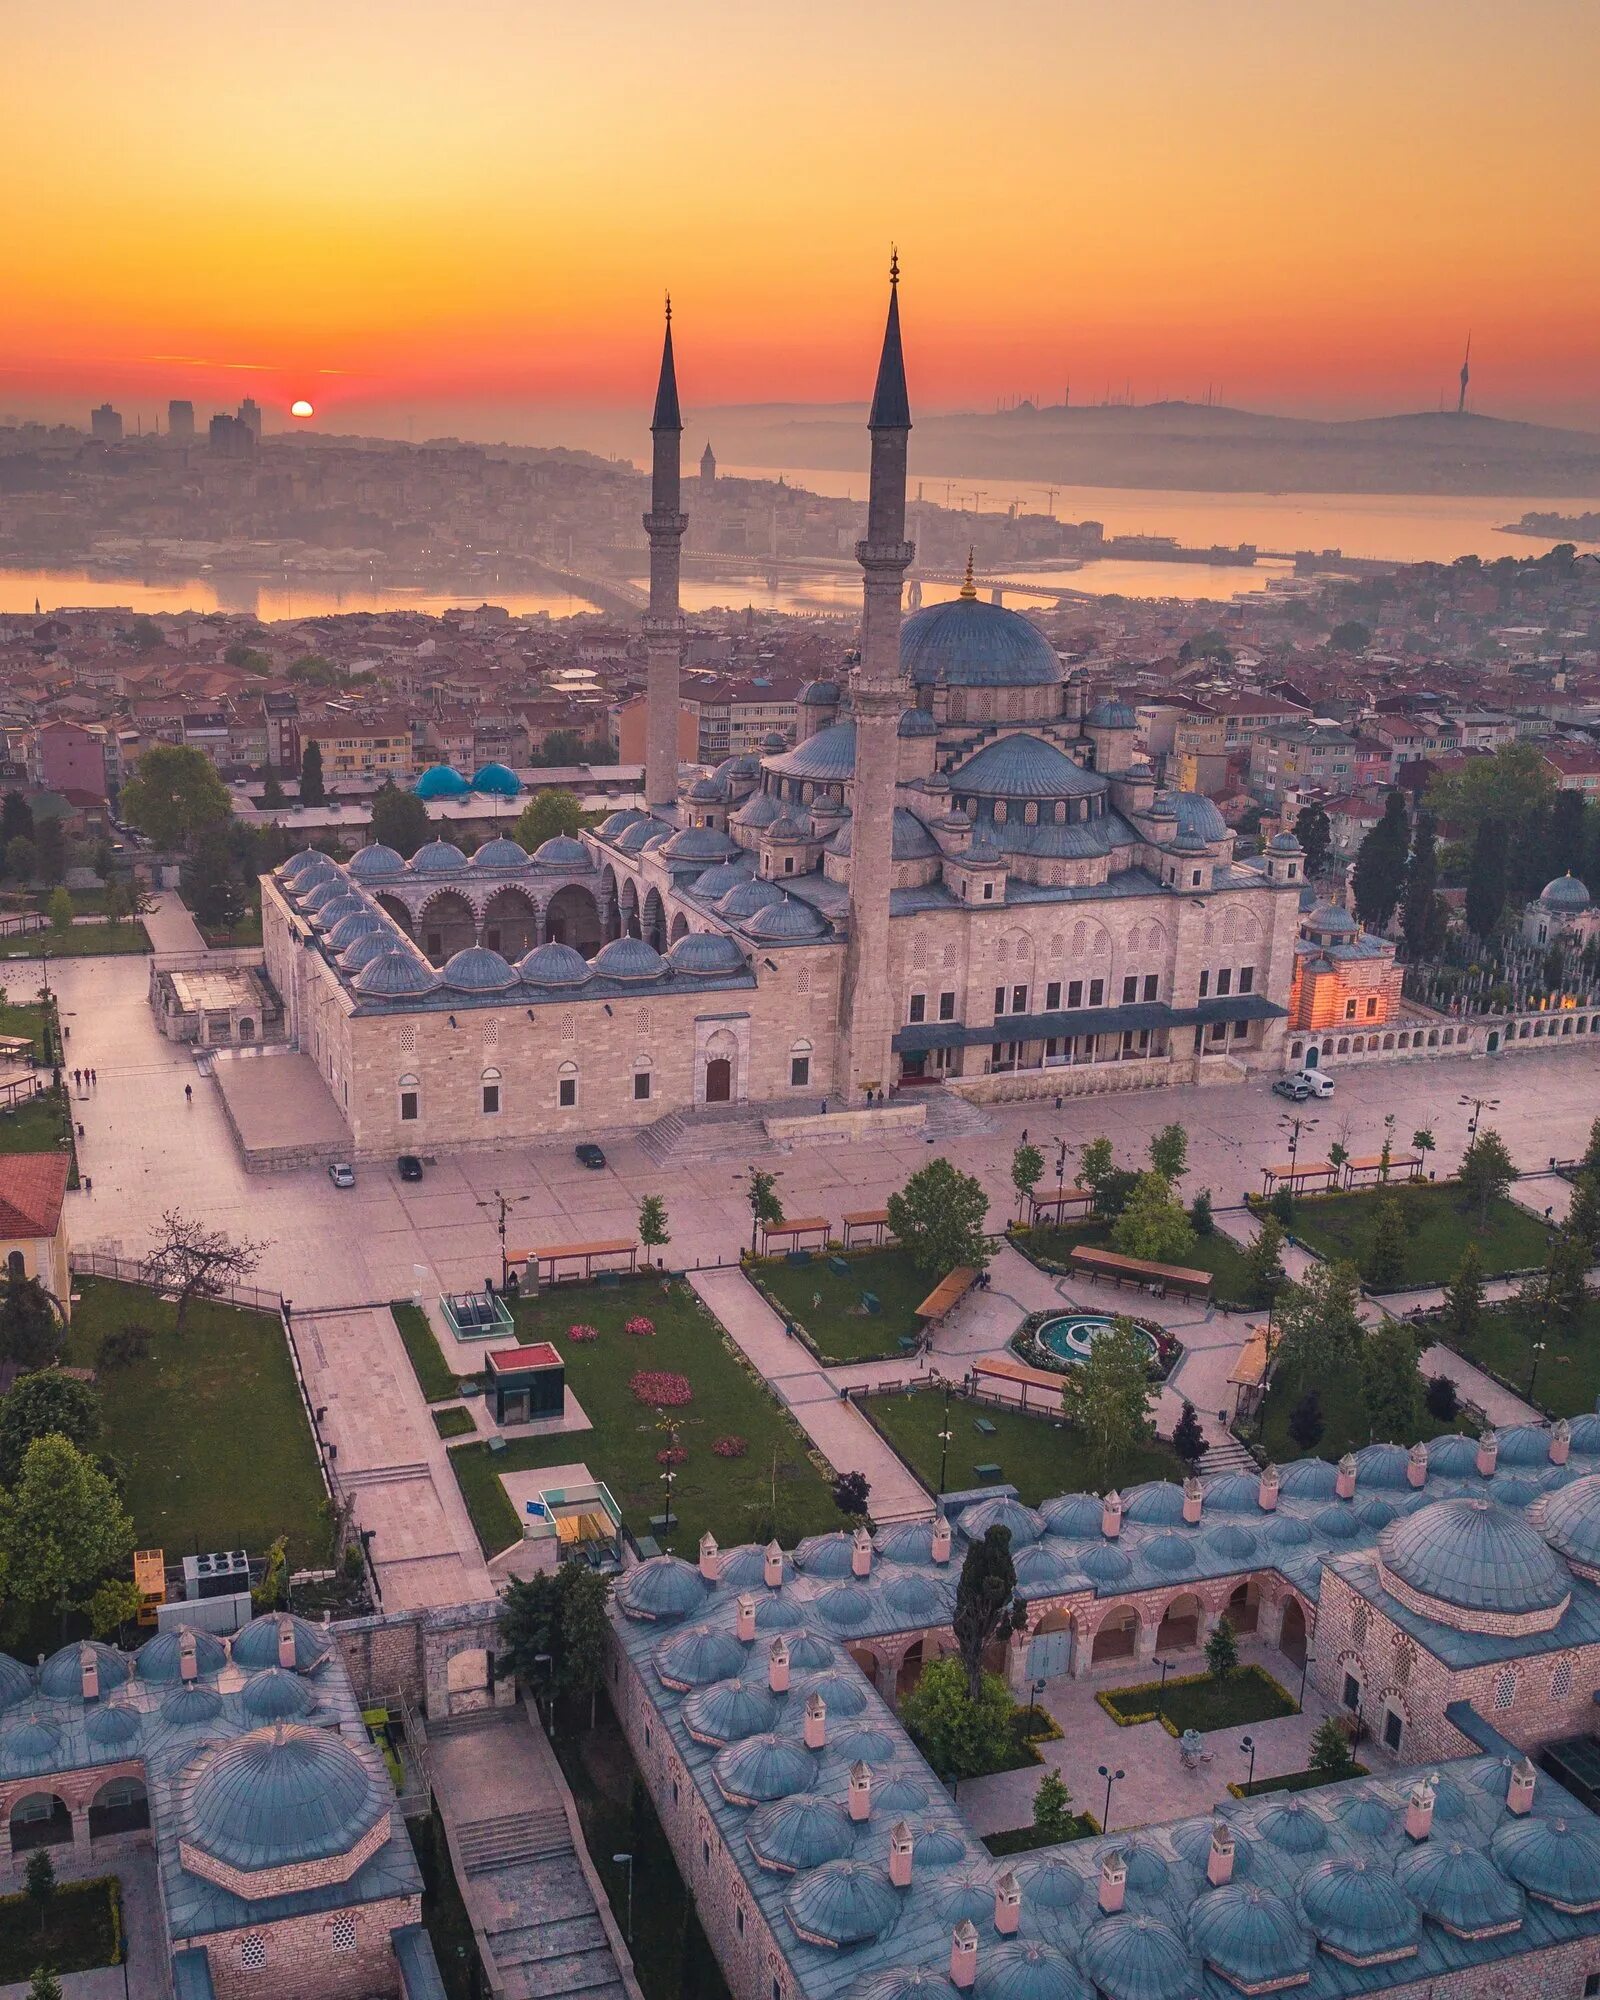 Фатих султанахмет. Фатих Стамбул. Стамбул Фатих Султанахмет. Султанахмет (район Фатих). Турецкие мечети в Стамбуле Фатих.